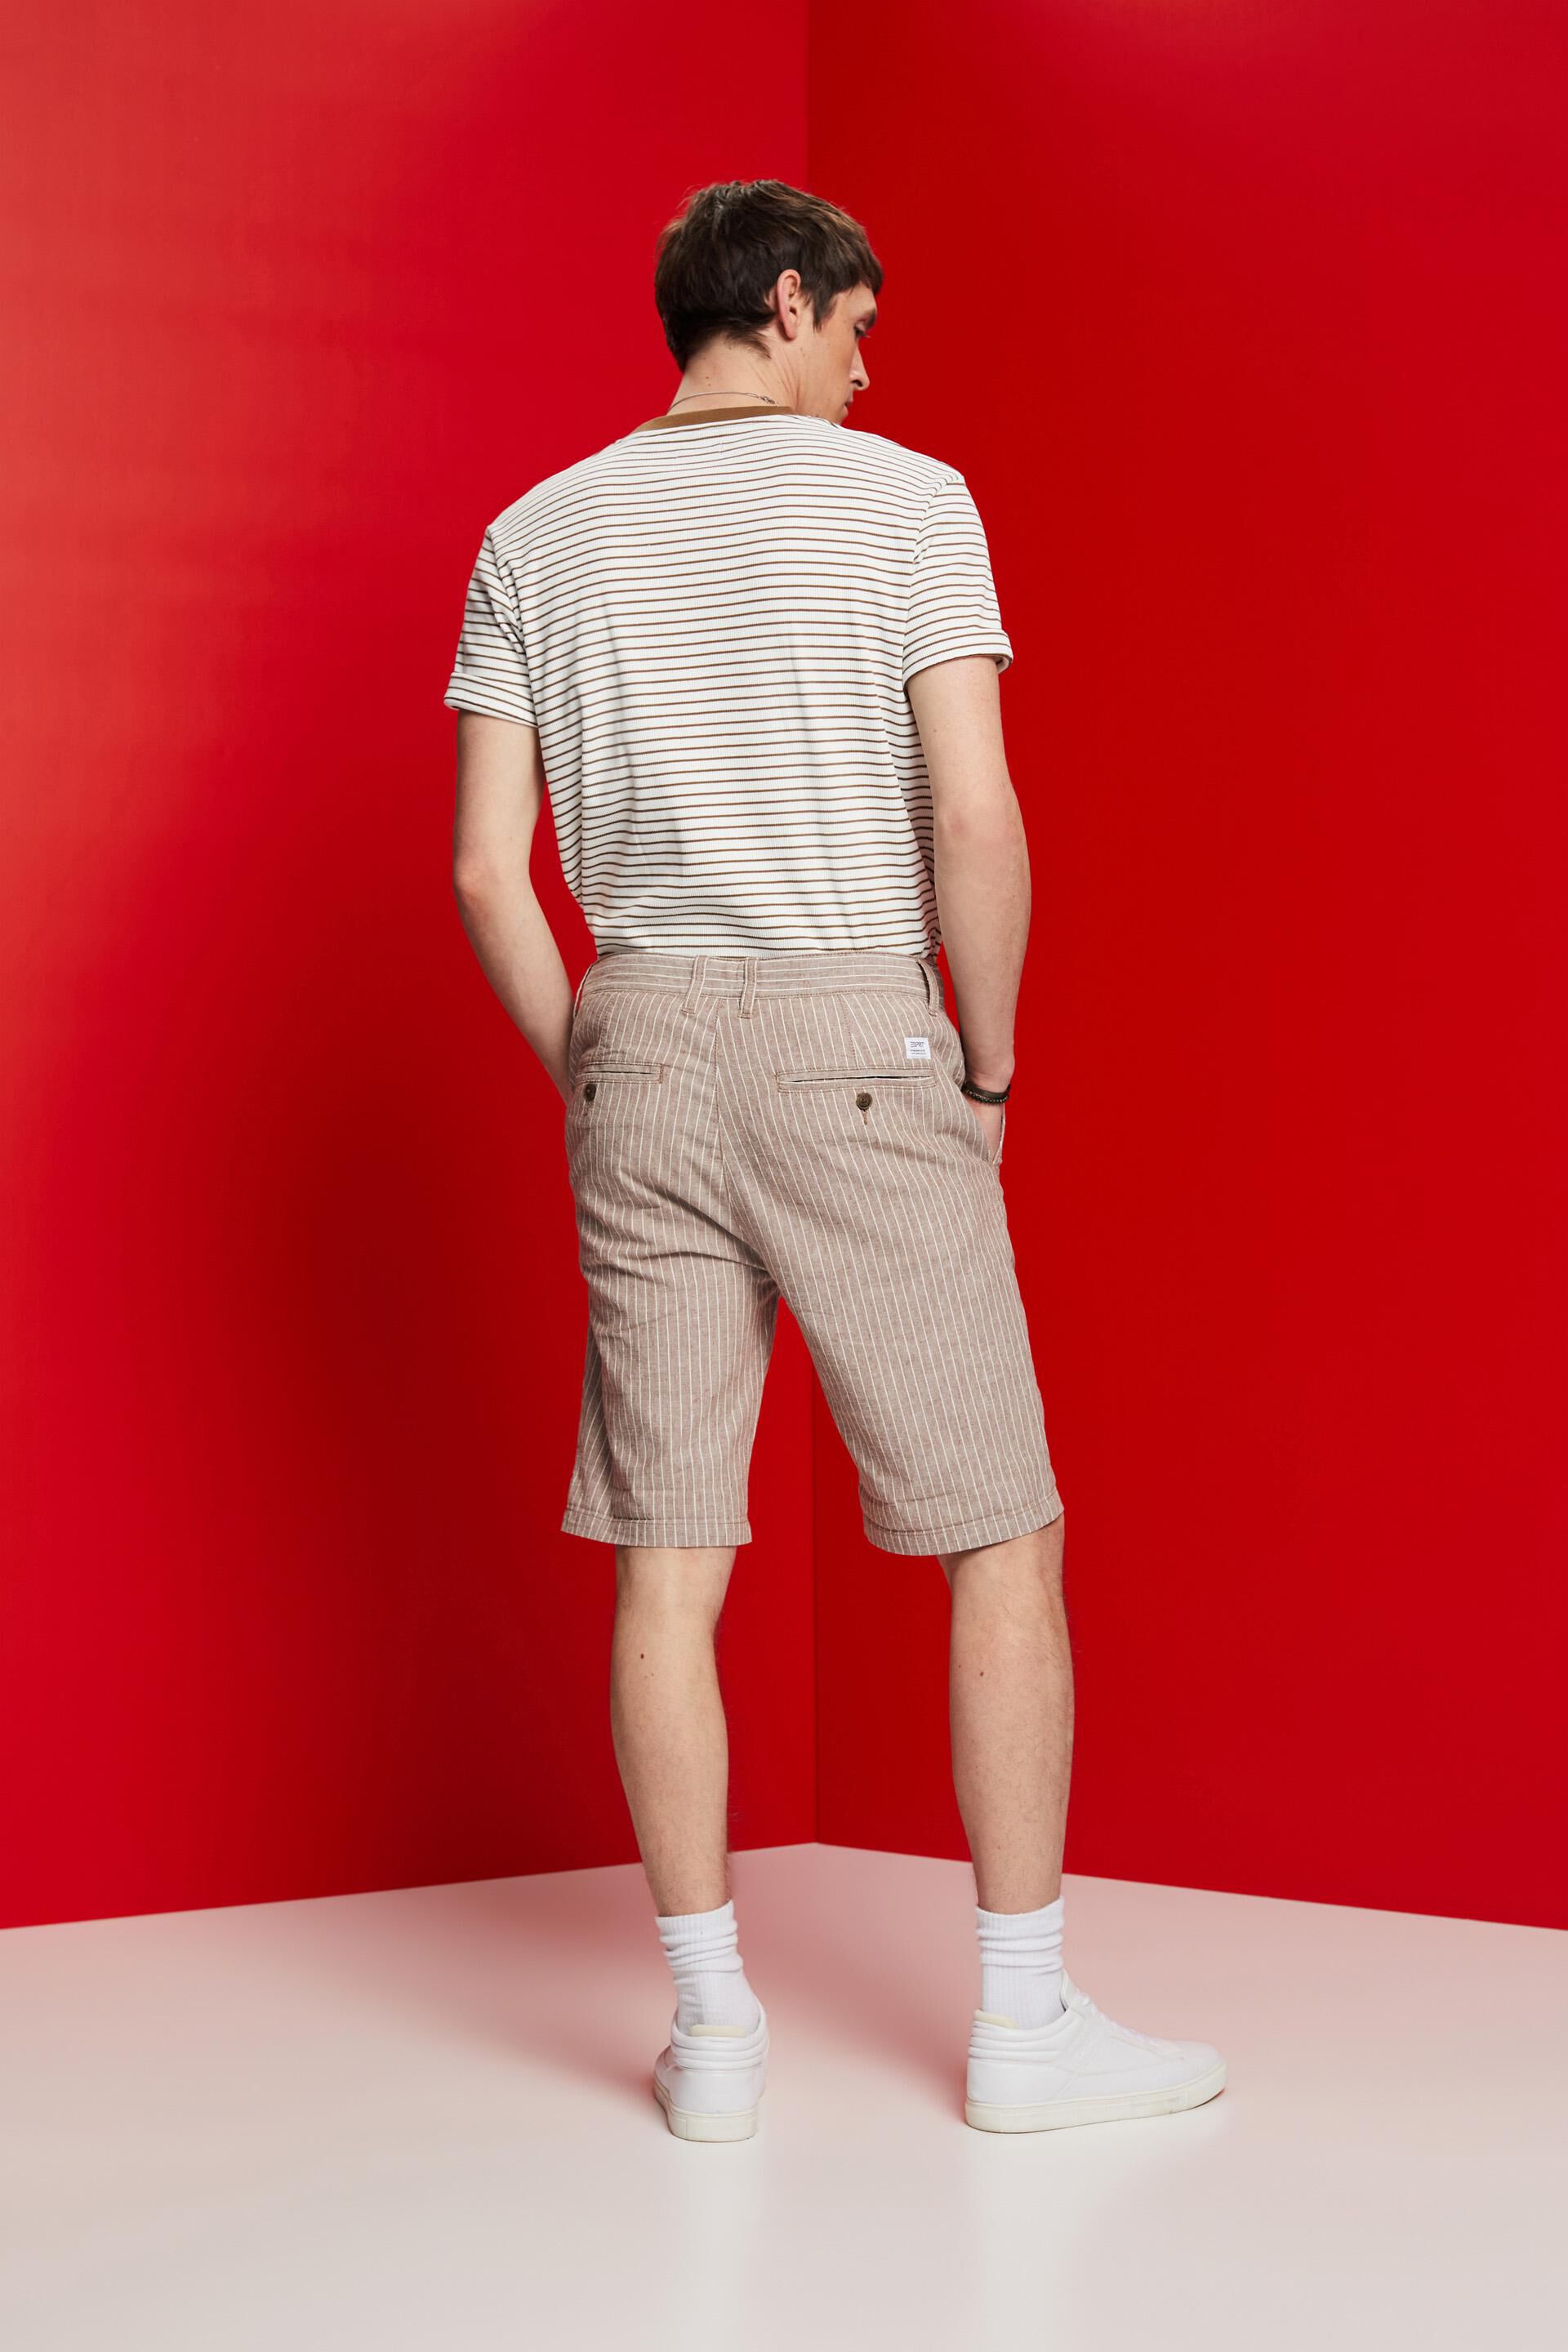 ESPRIT - Striped chino shorts, cotton-linen blend at our online shop